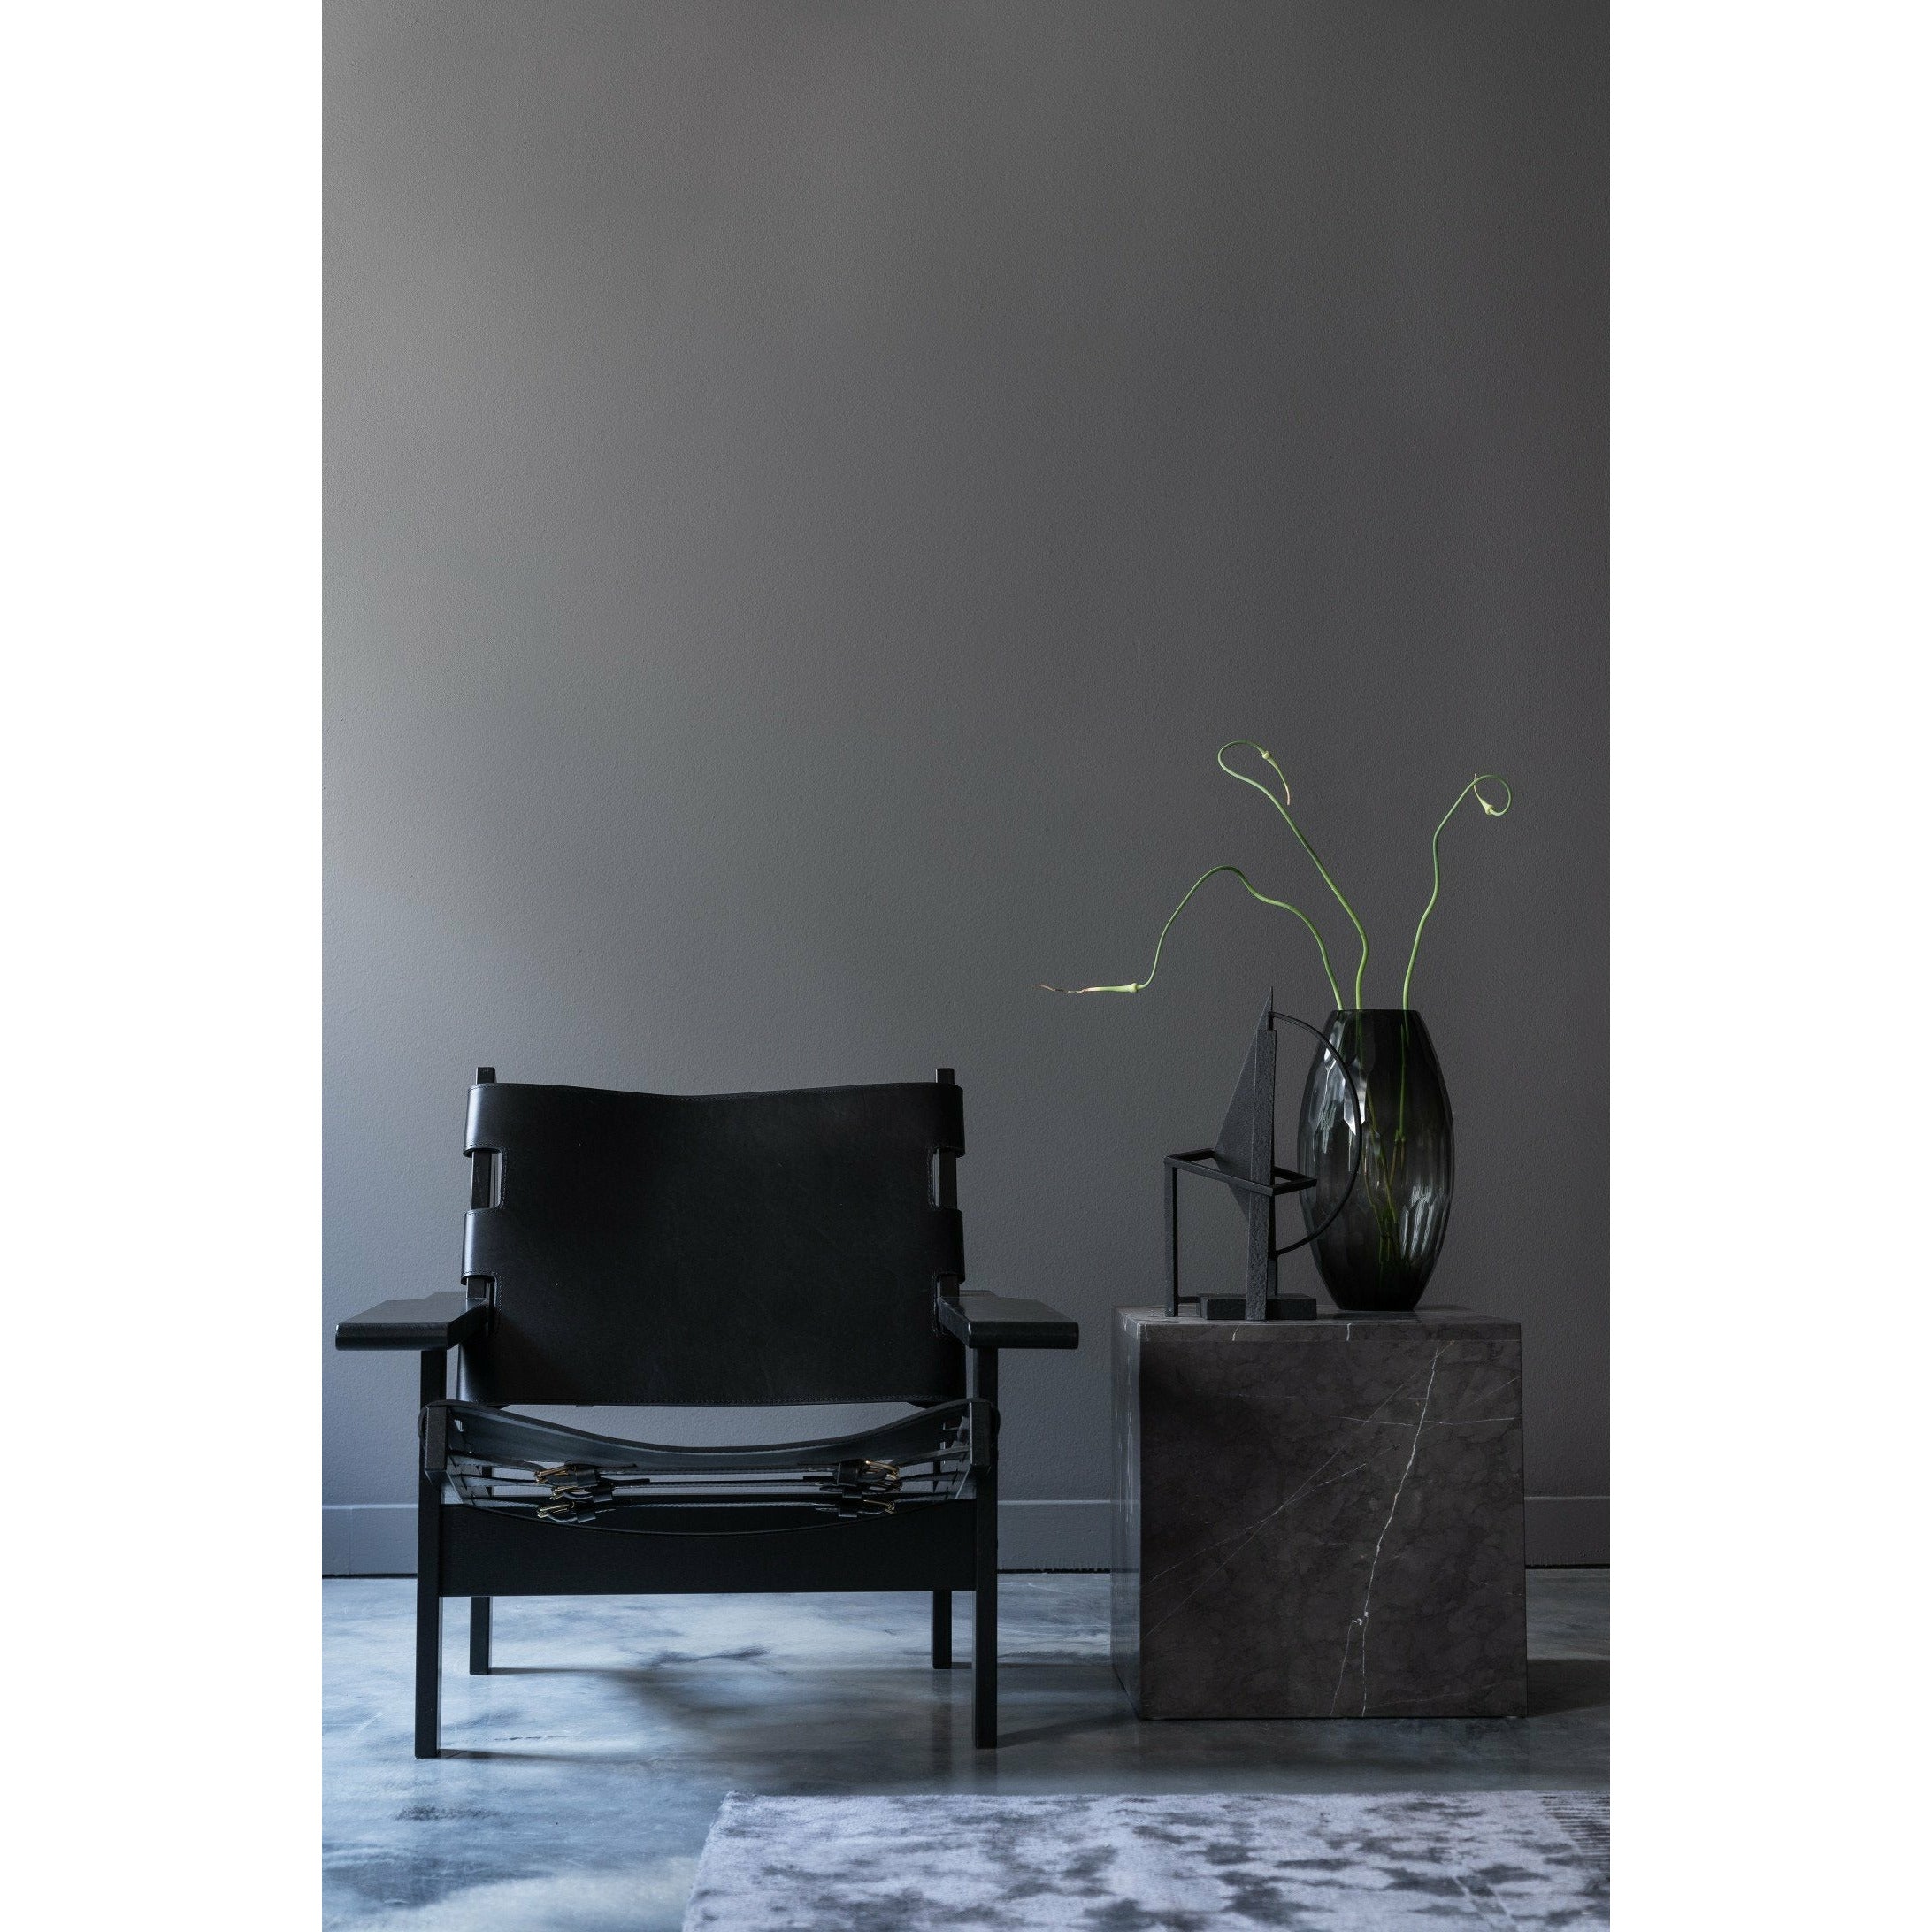 Klassik Studio kø chaise de chasse chaise chêne savon, naturel